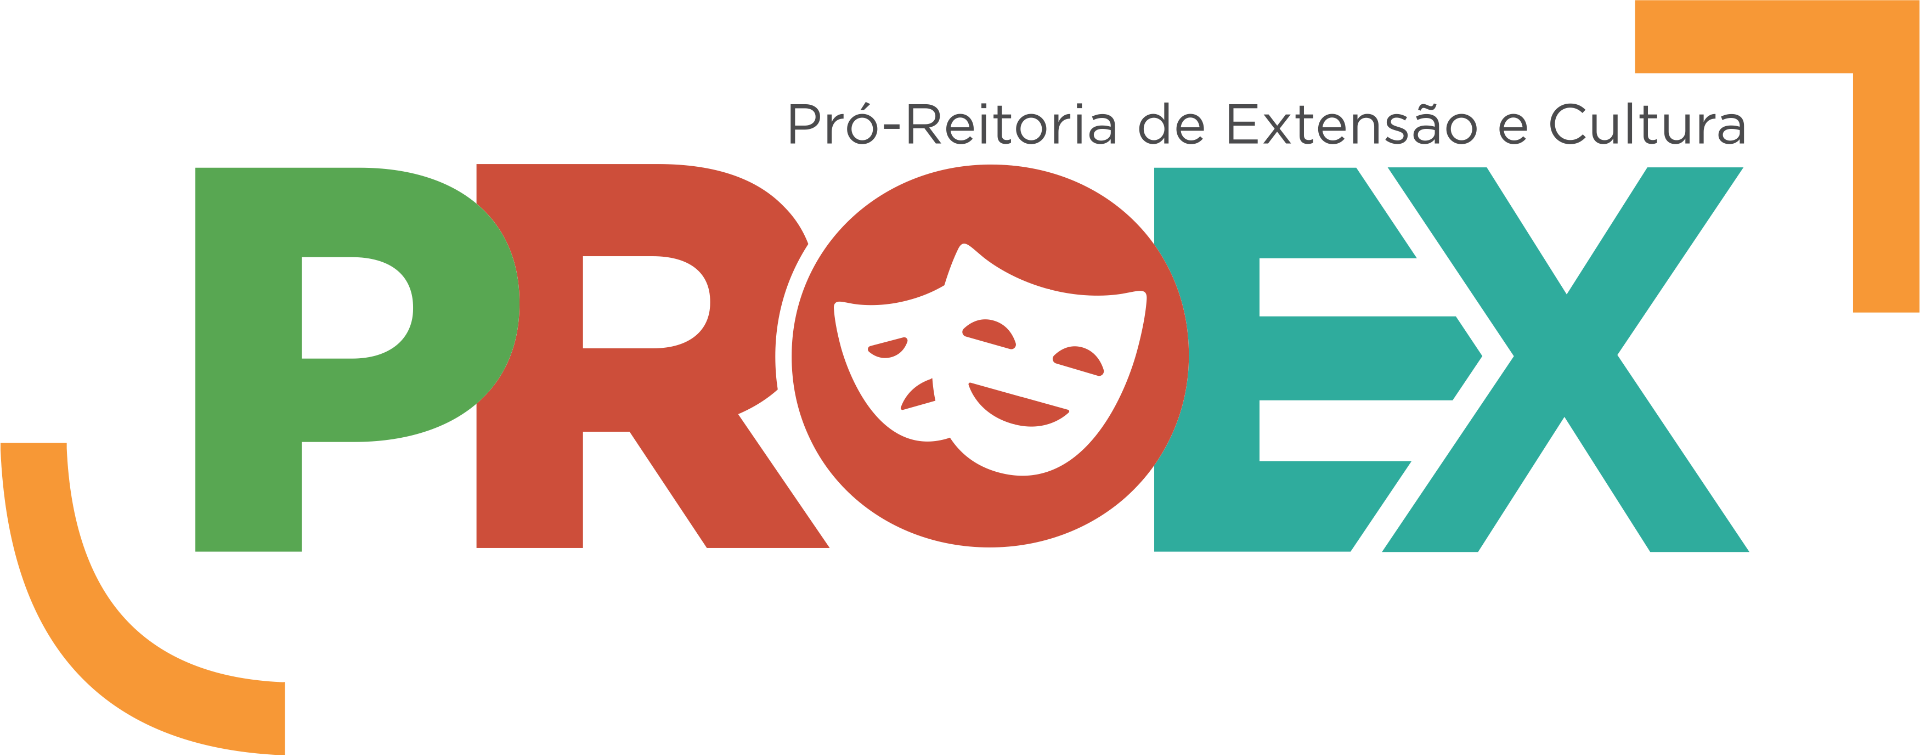 Logo - Proex.png